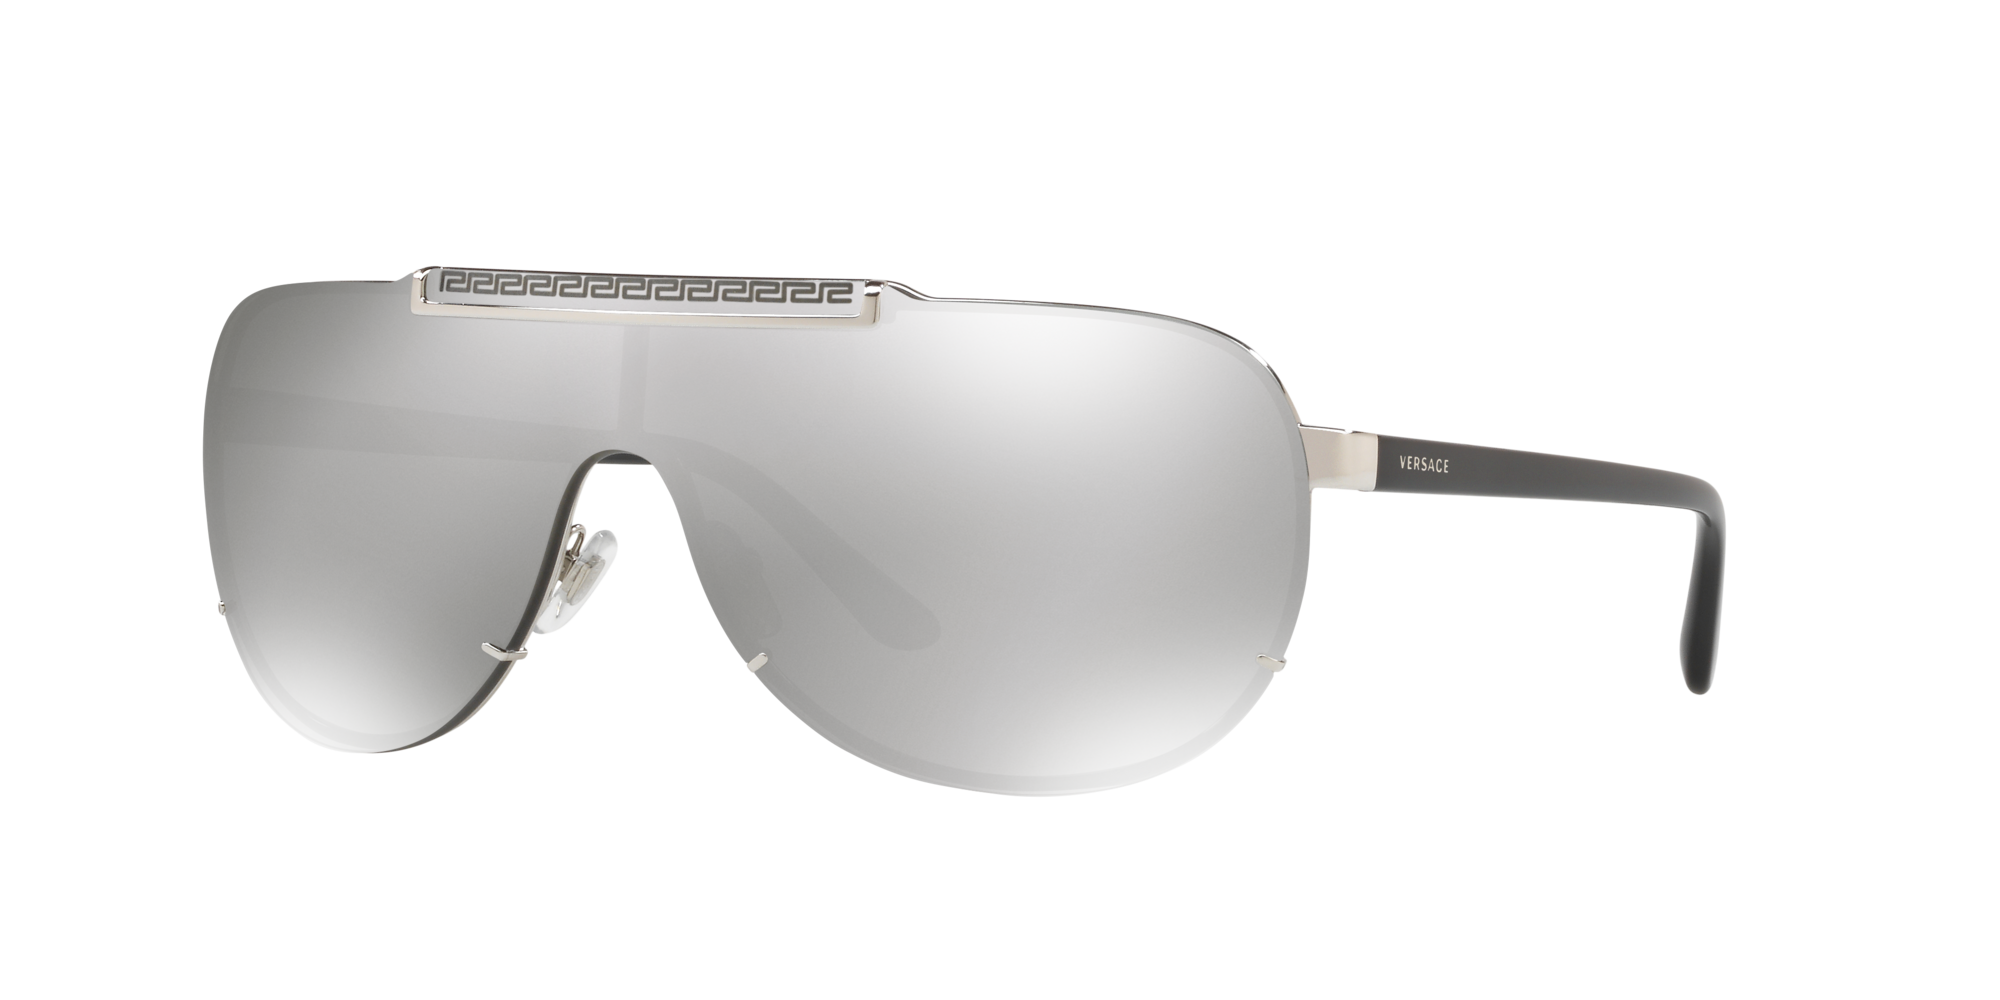 versace silver sunglasses